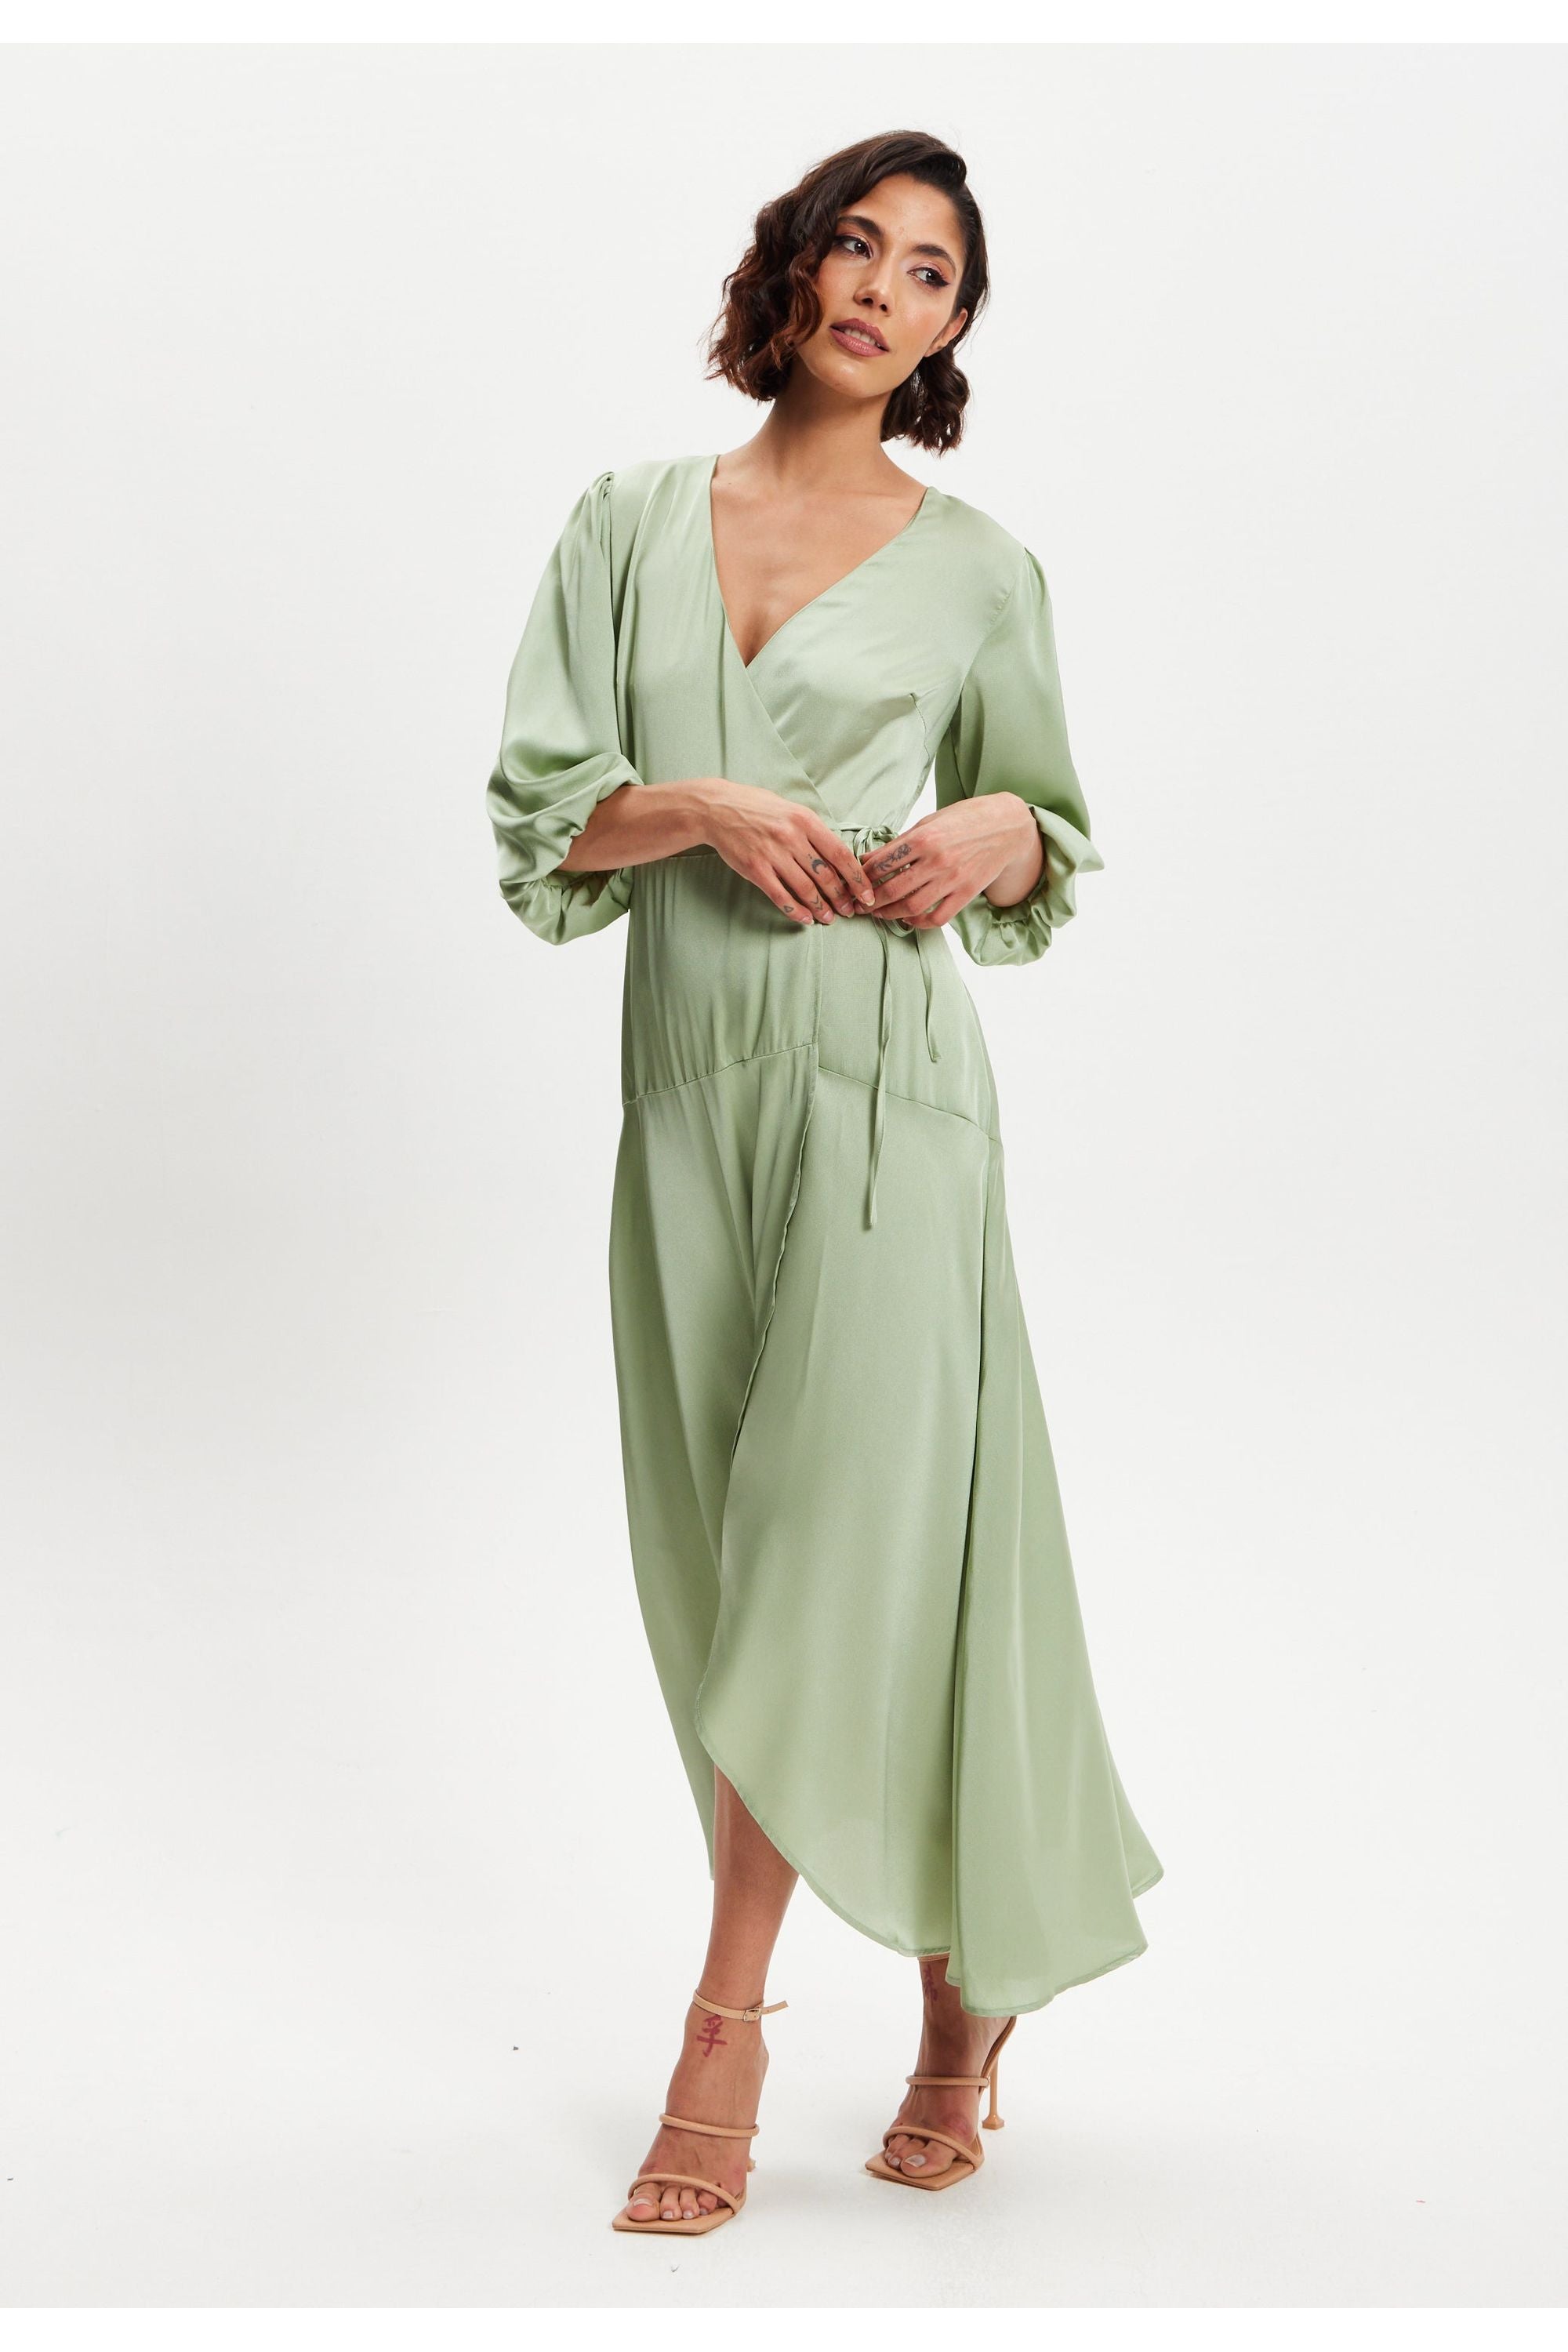 Sage Green Midi Wrap Dress With Short Puff Sleeves LIQ20-128Green